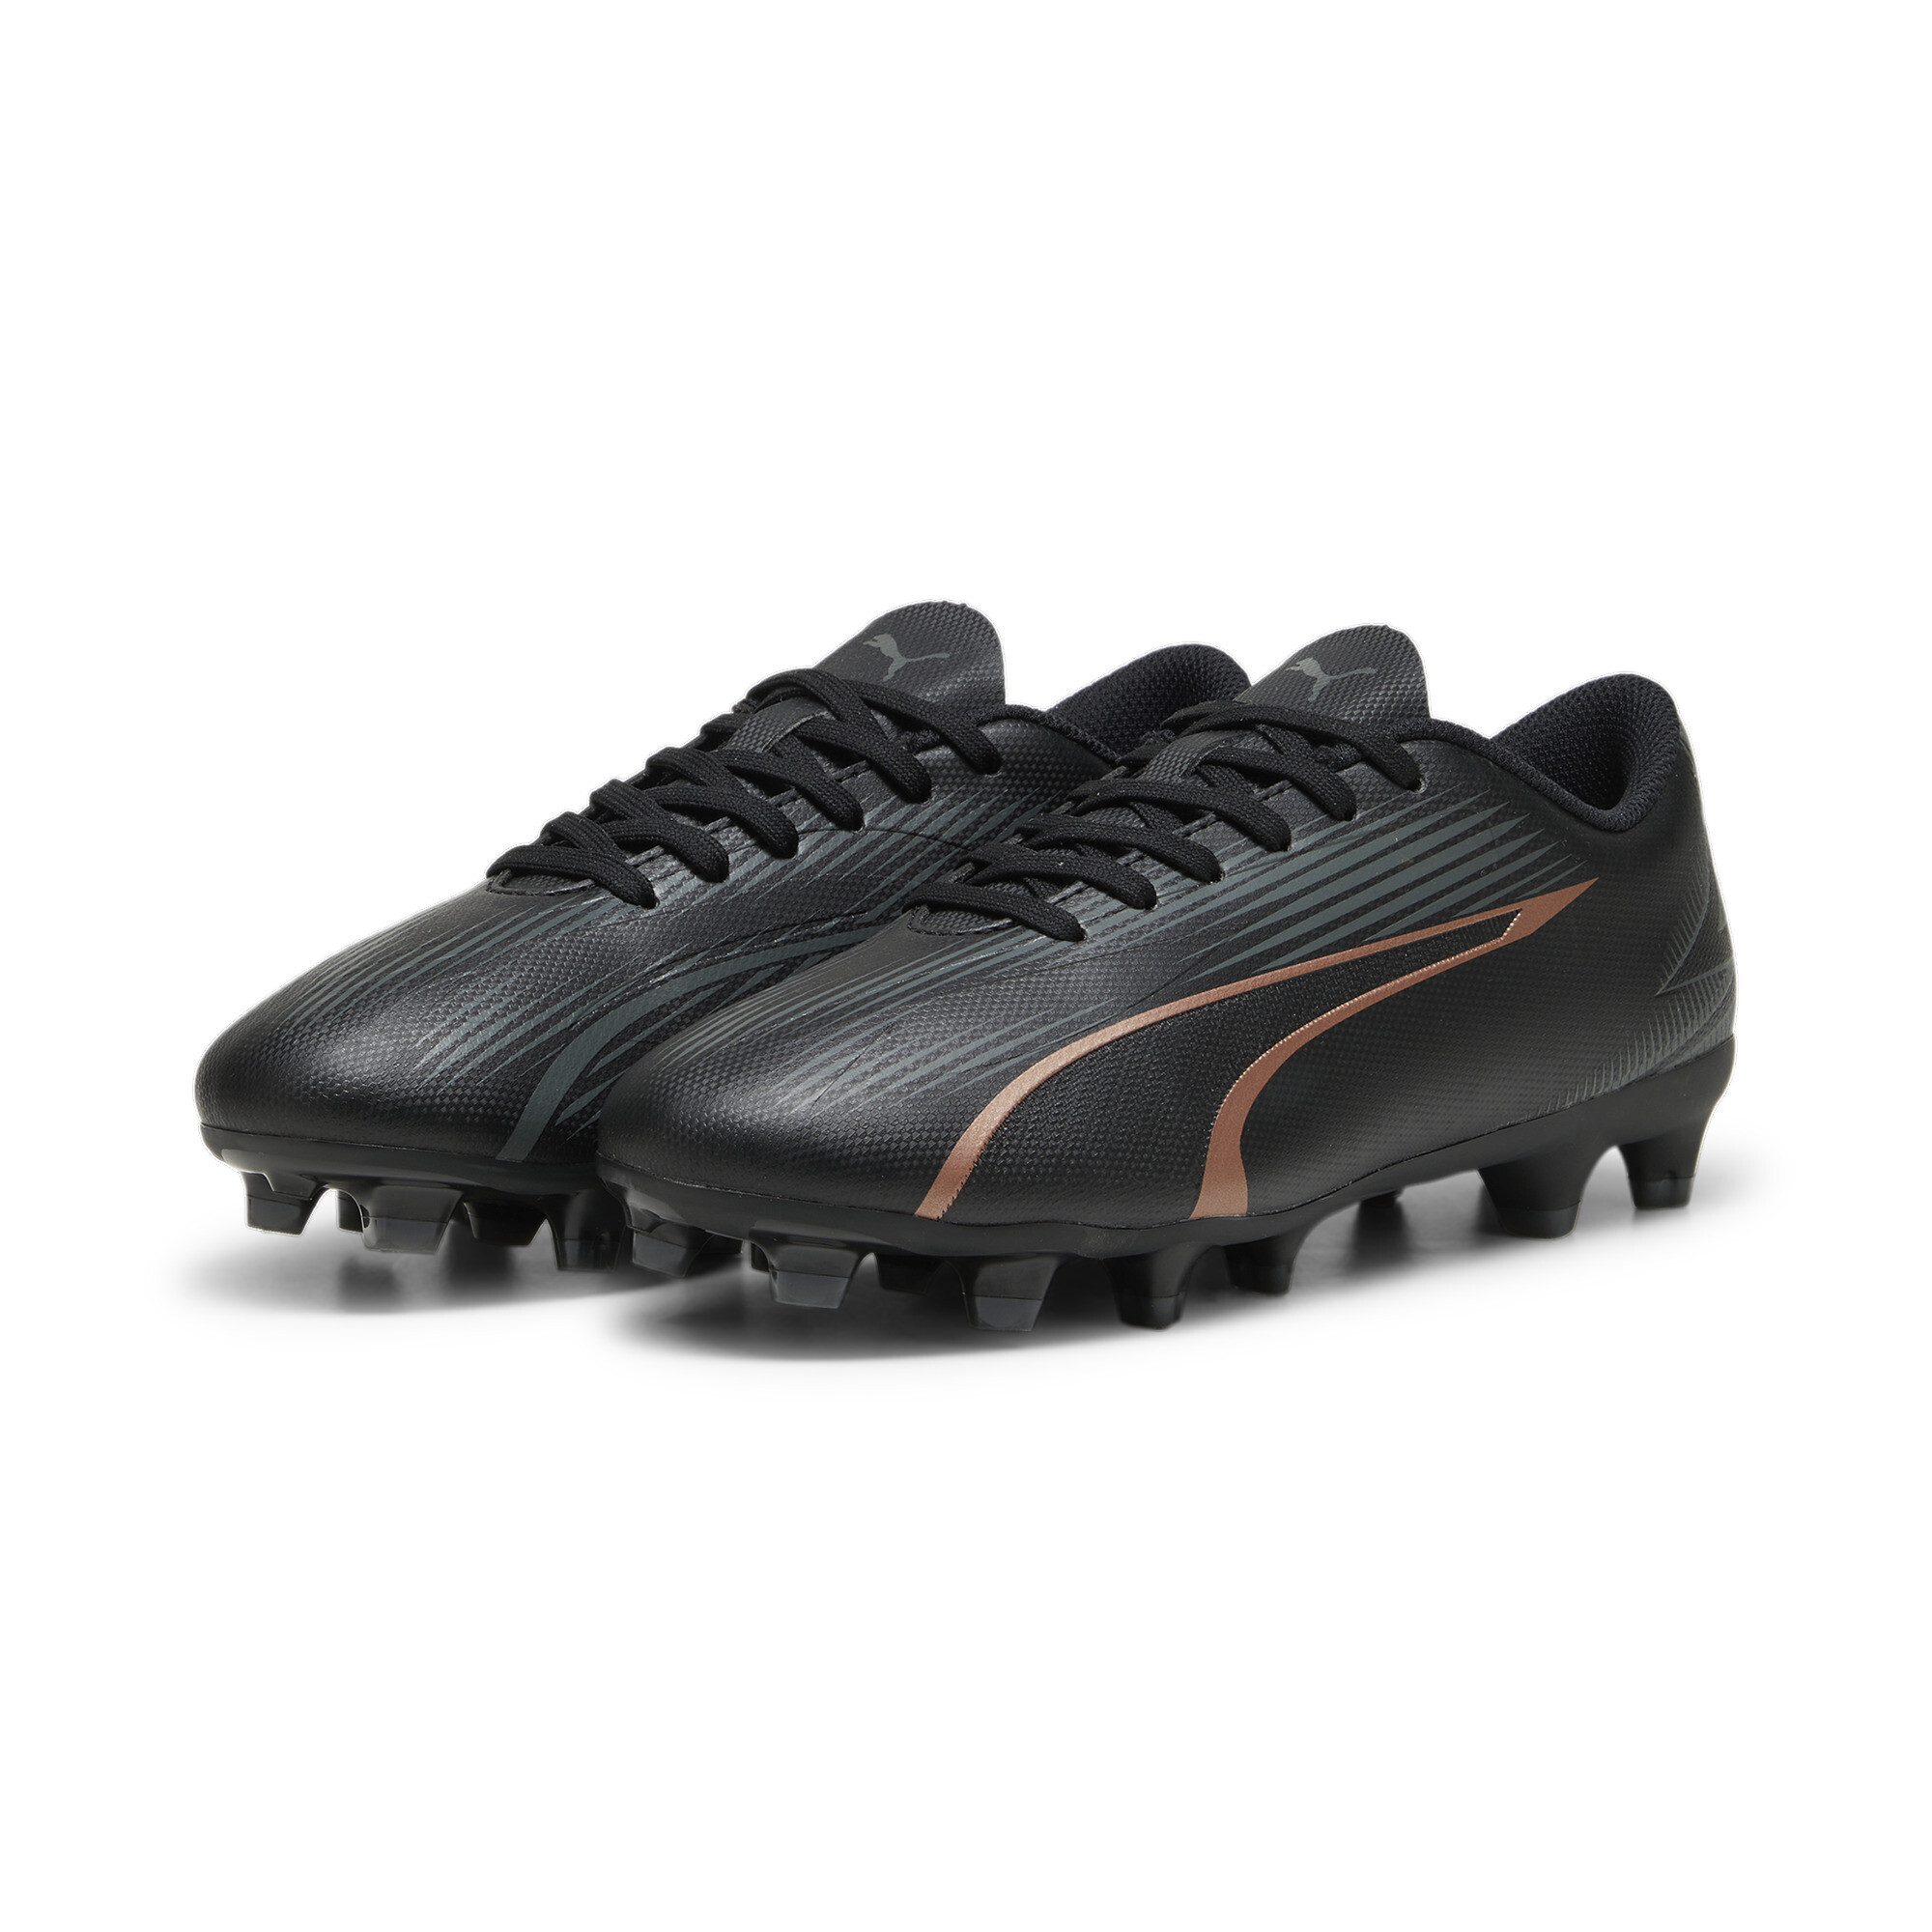 PUMA ULTRA PLAY FG/AG Youth Football Boots In Black, Size EU 30